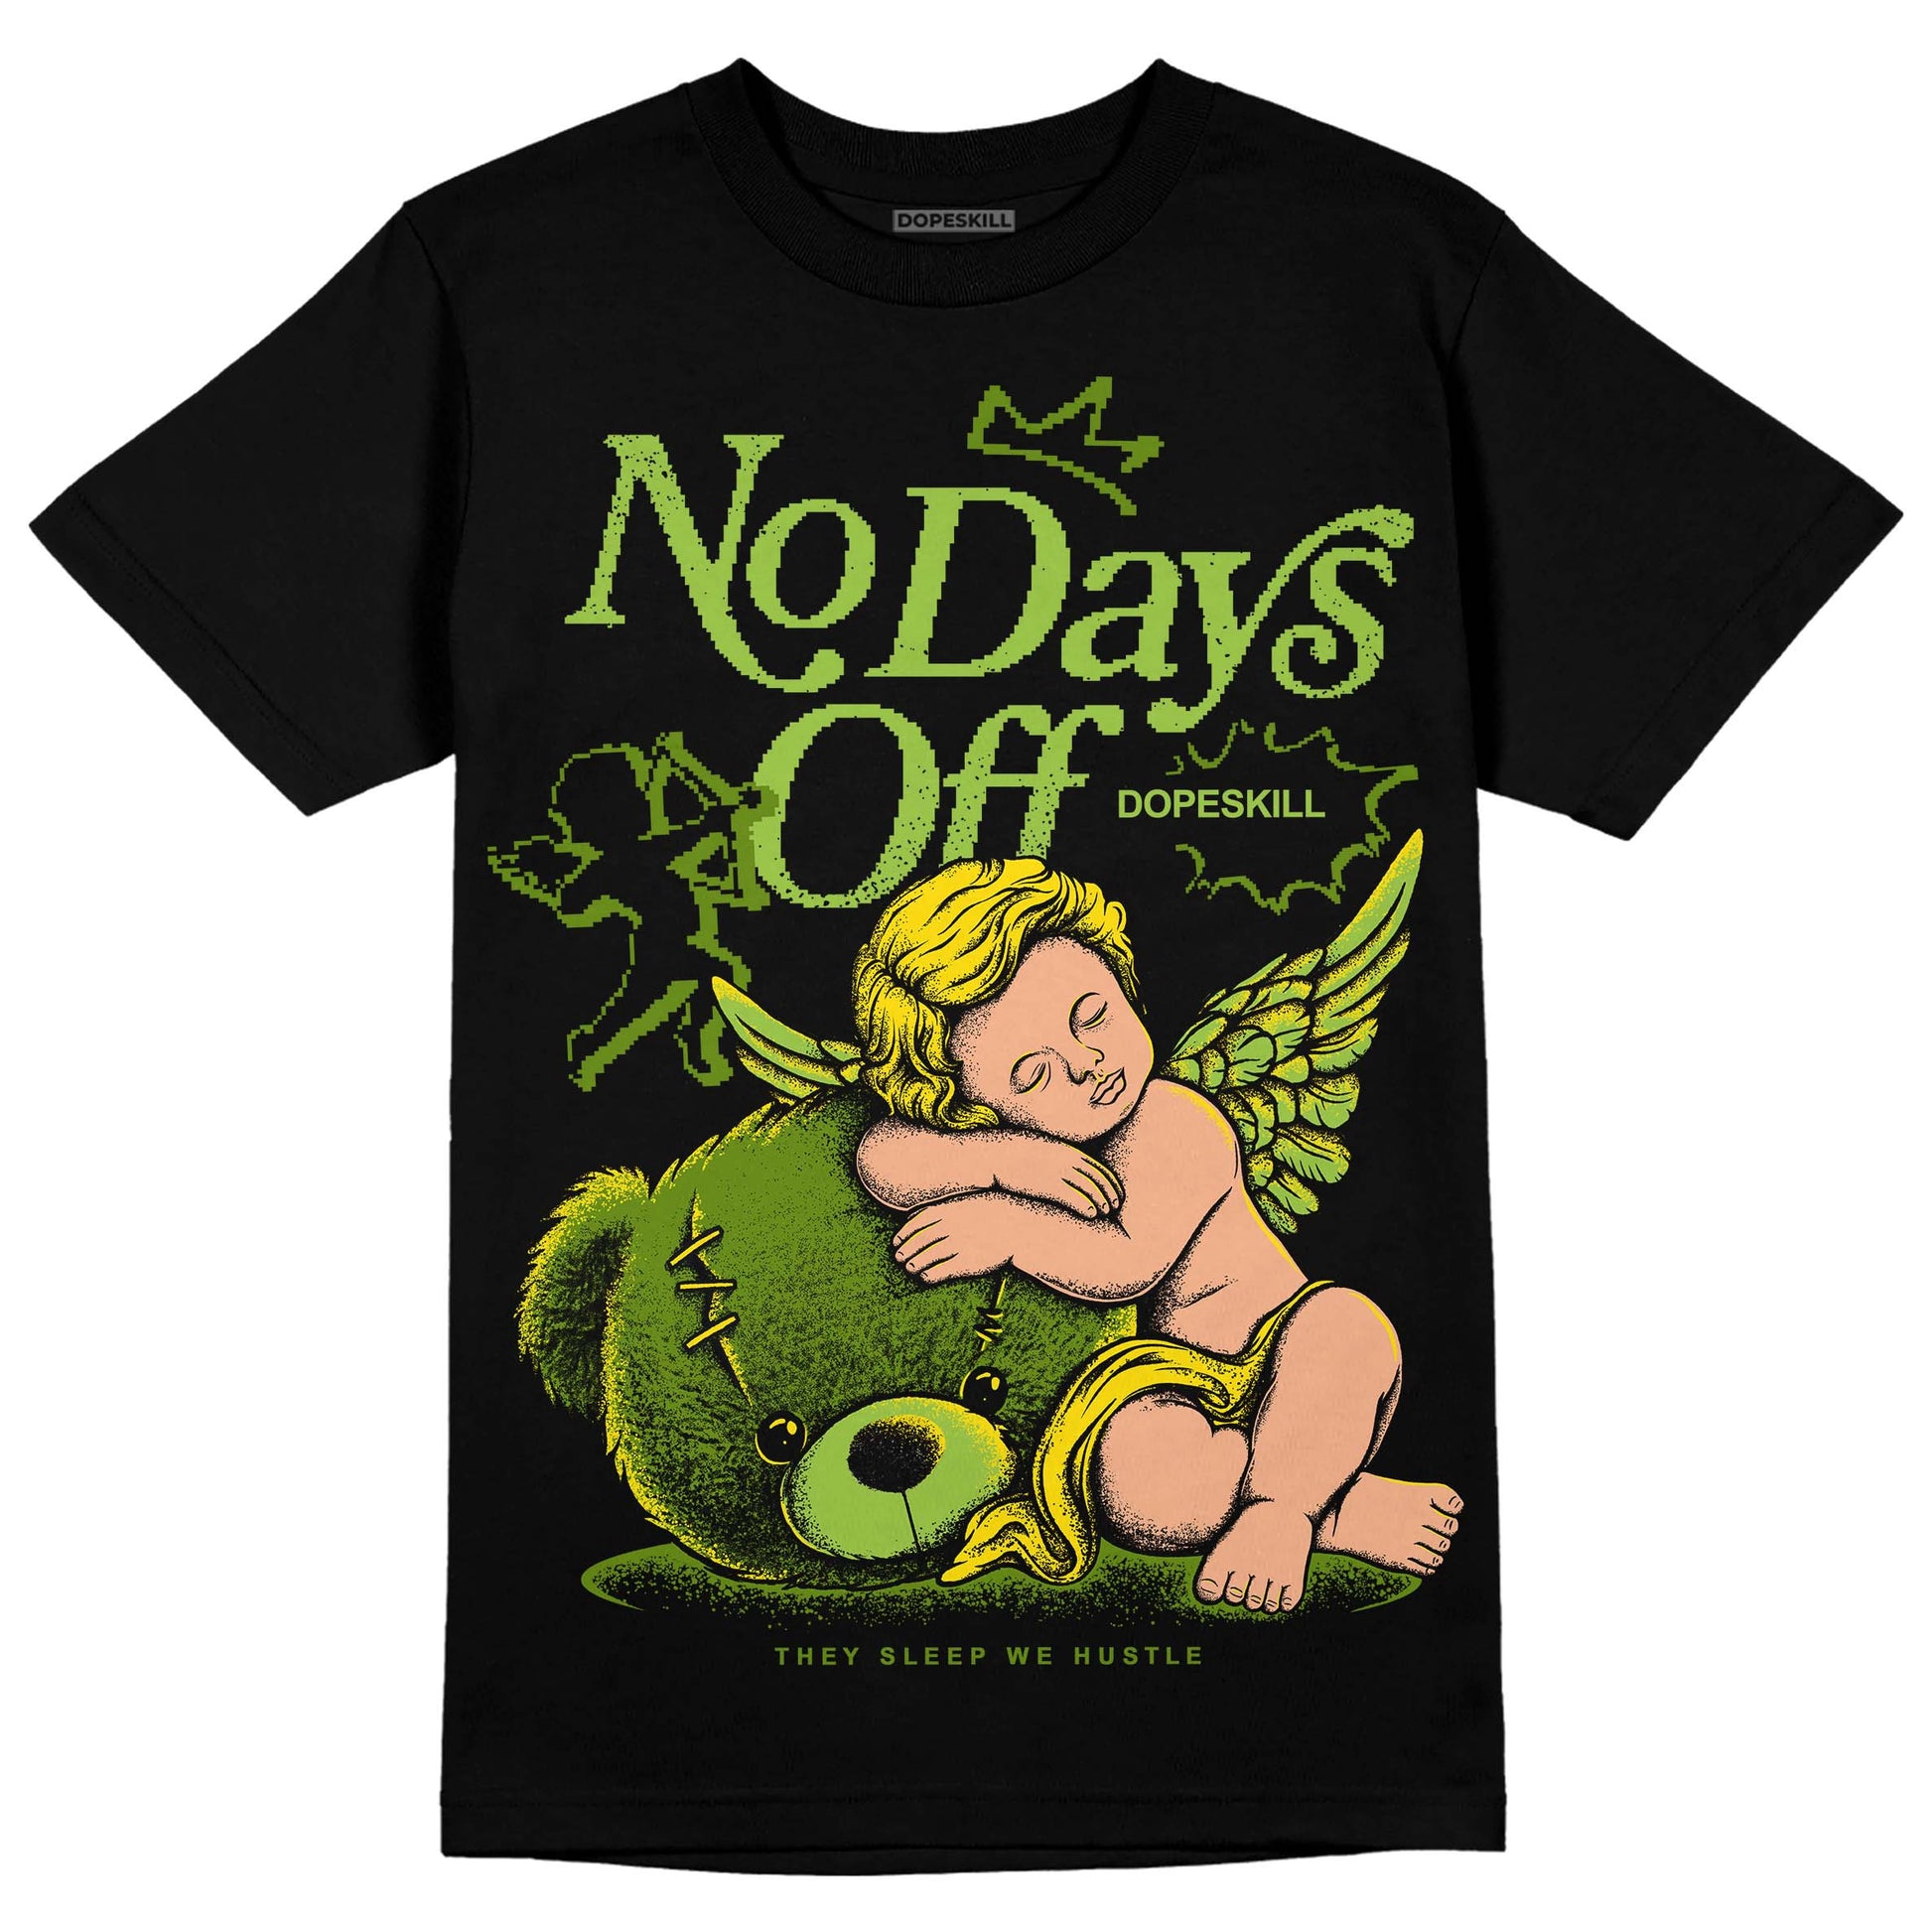 SB Dunk Low Chlorophyll DopeSkill T-Shirt New No Days Off Graphic Streetwear - Black